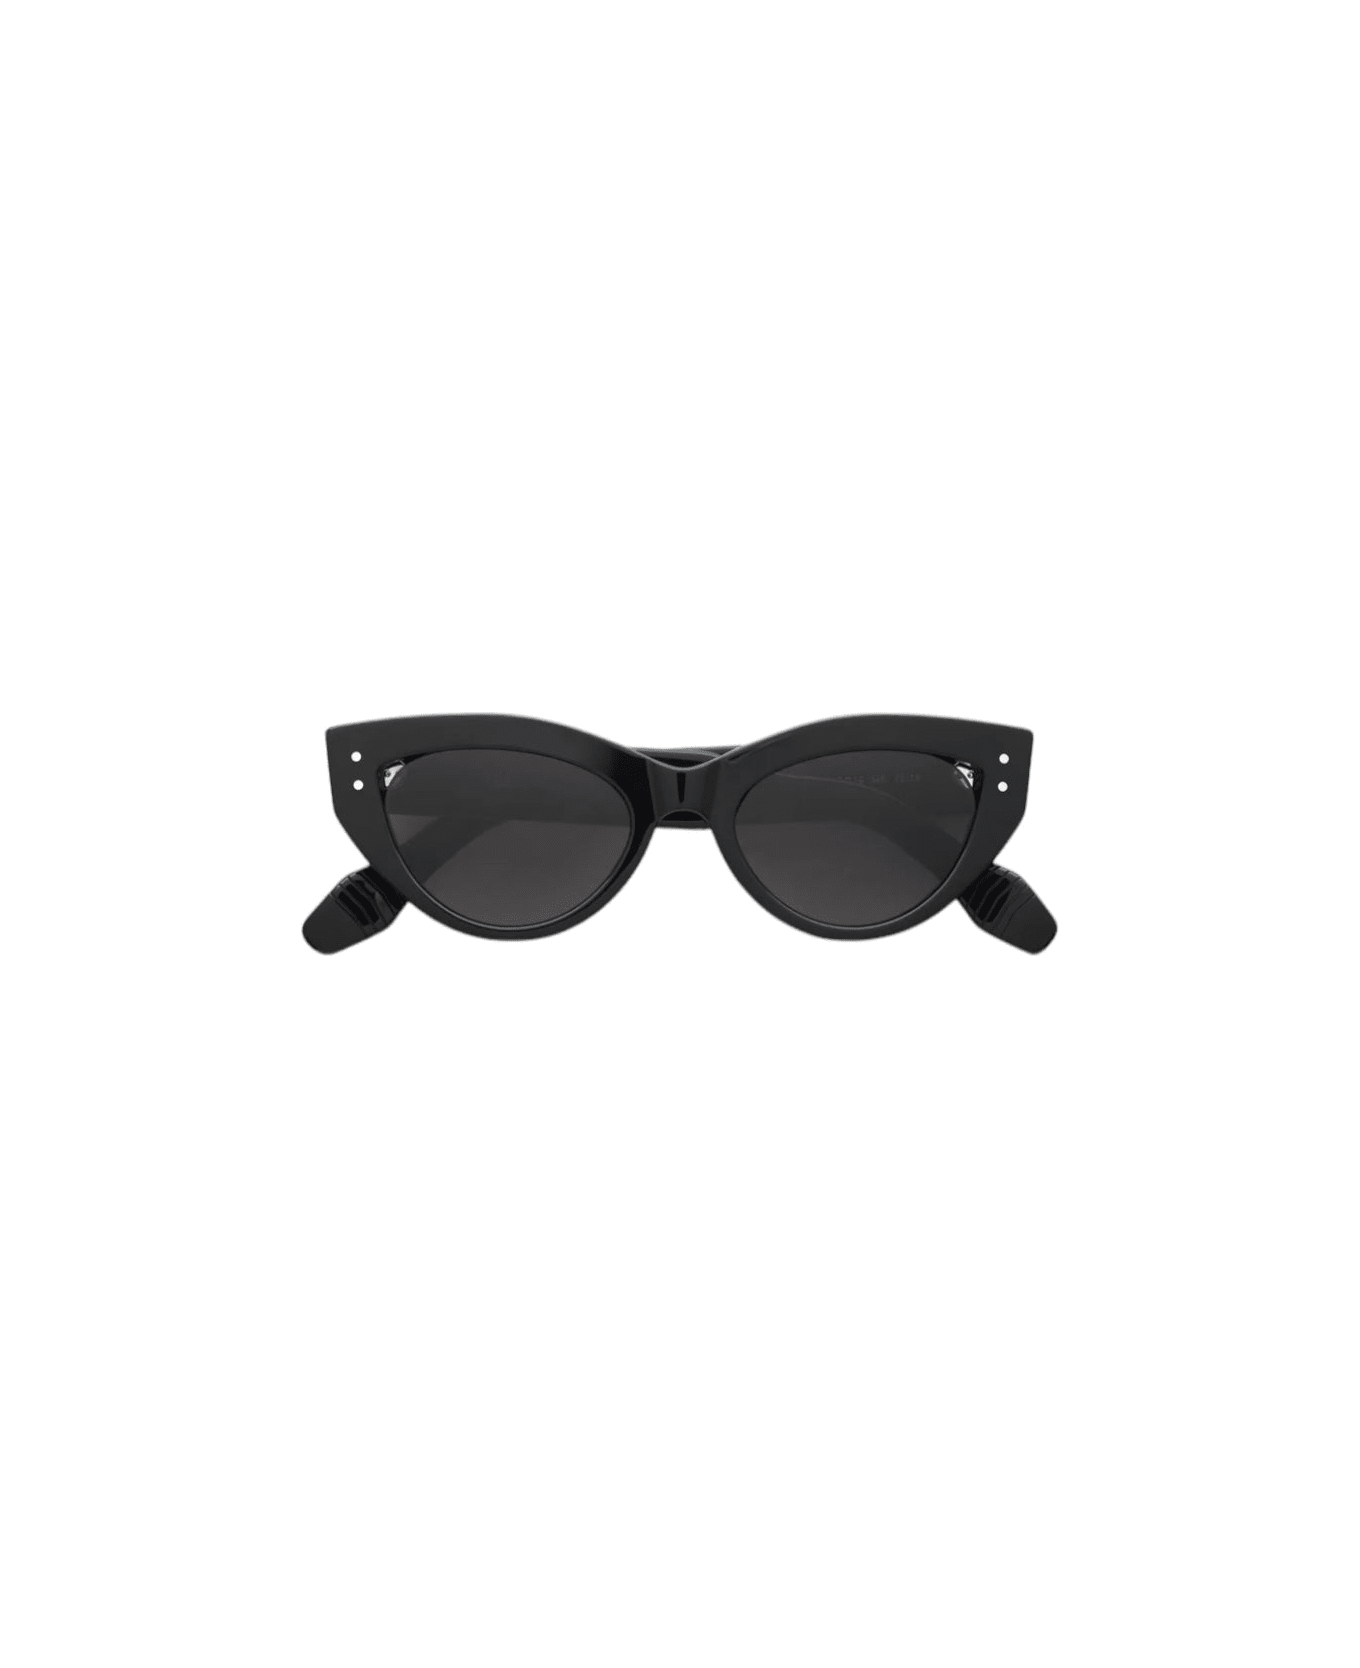 Cubitts Caledonia Sunglasses